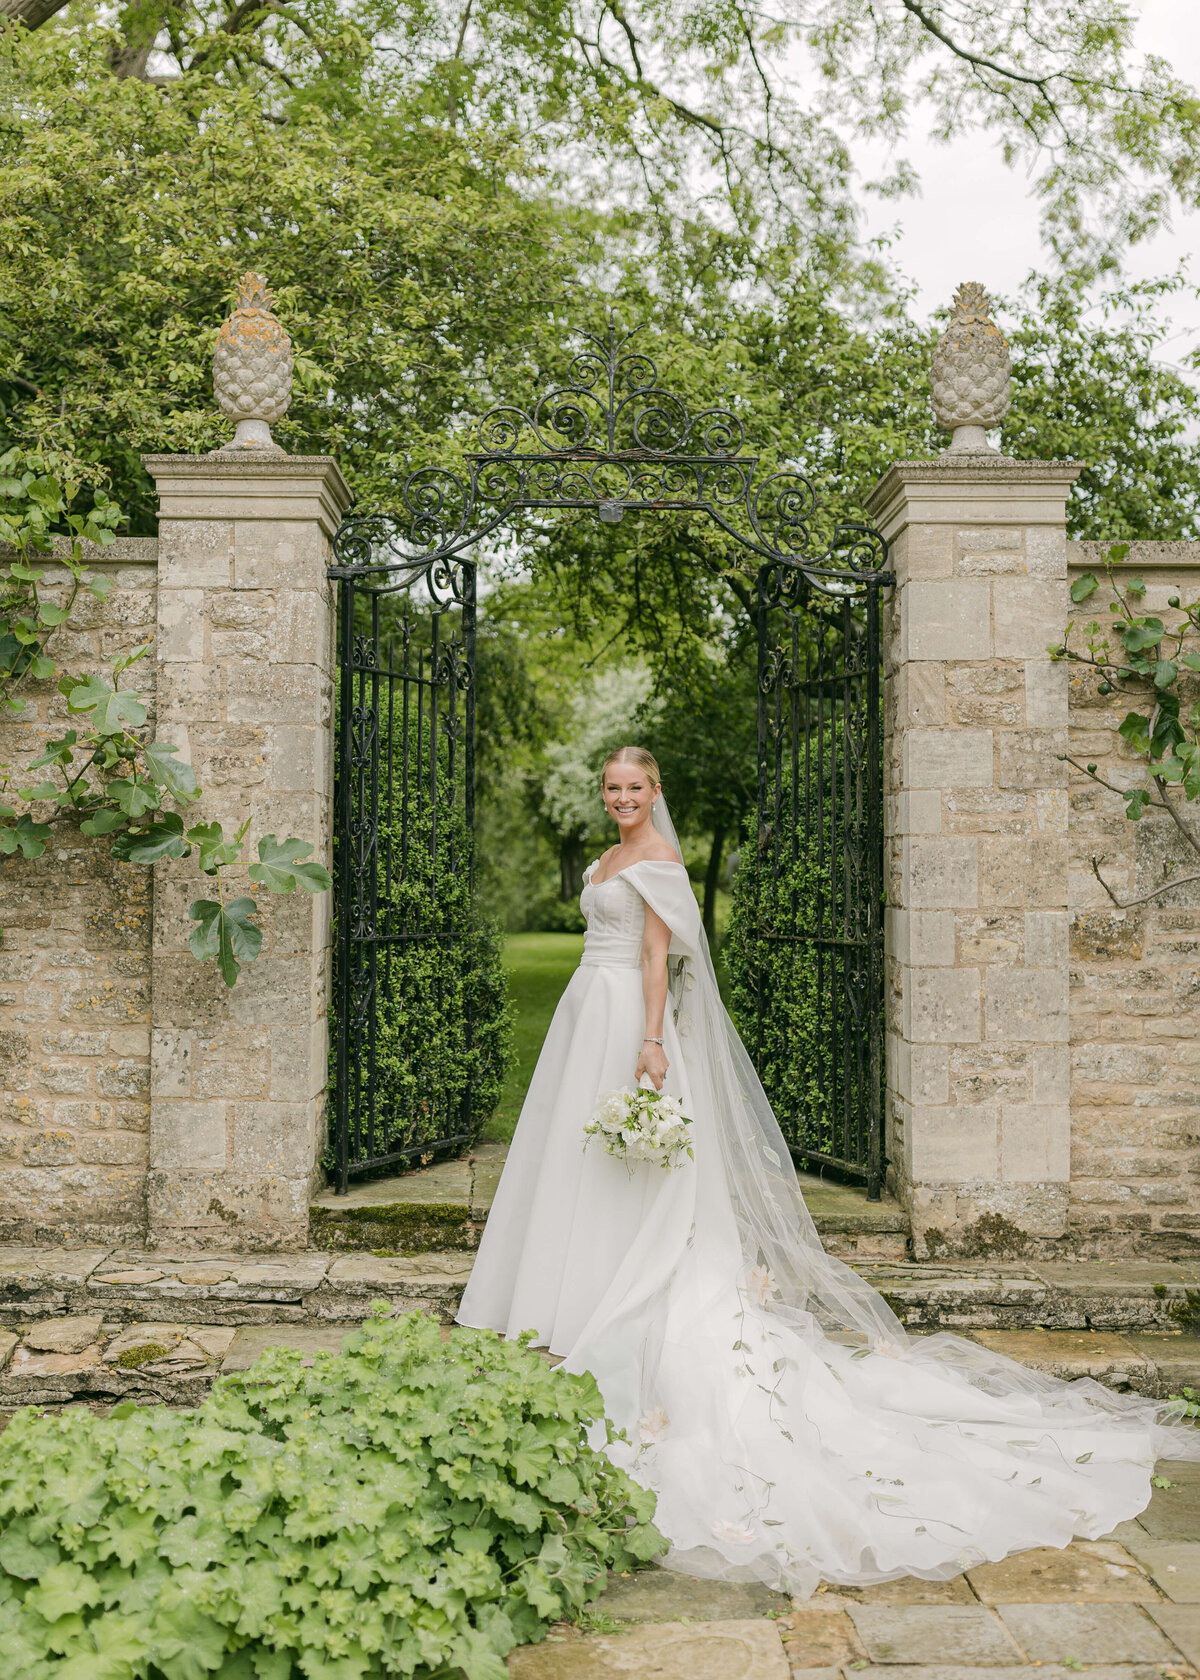 chloe-winstanley-weddings-cotswolds-cornwell-manor-monique-lhuillier-dress-bridal-portrait-garden